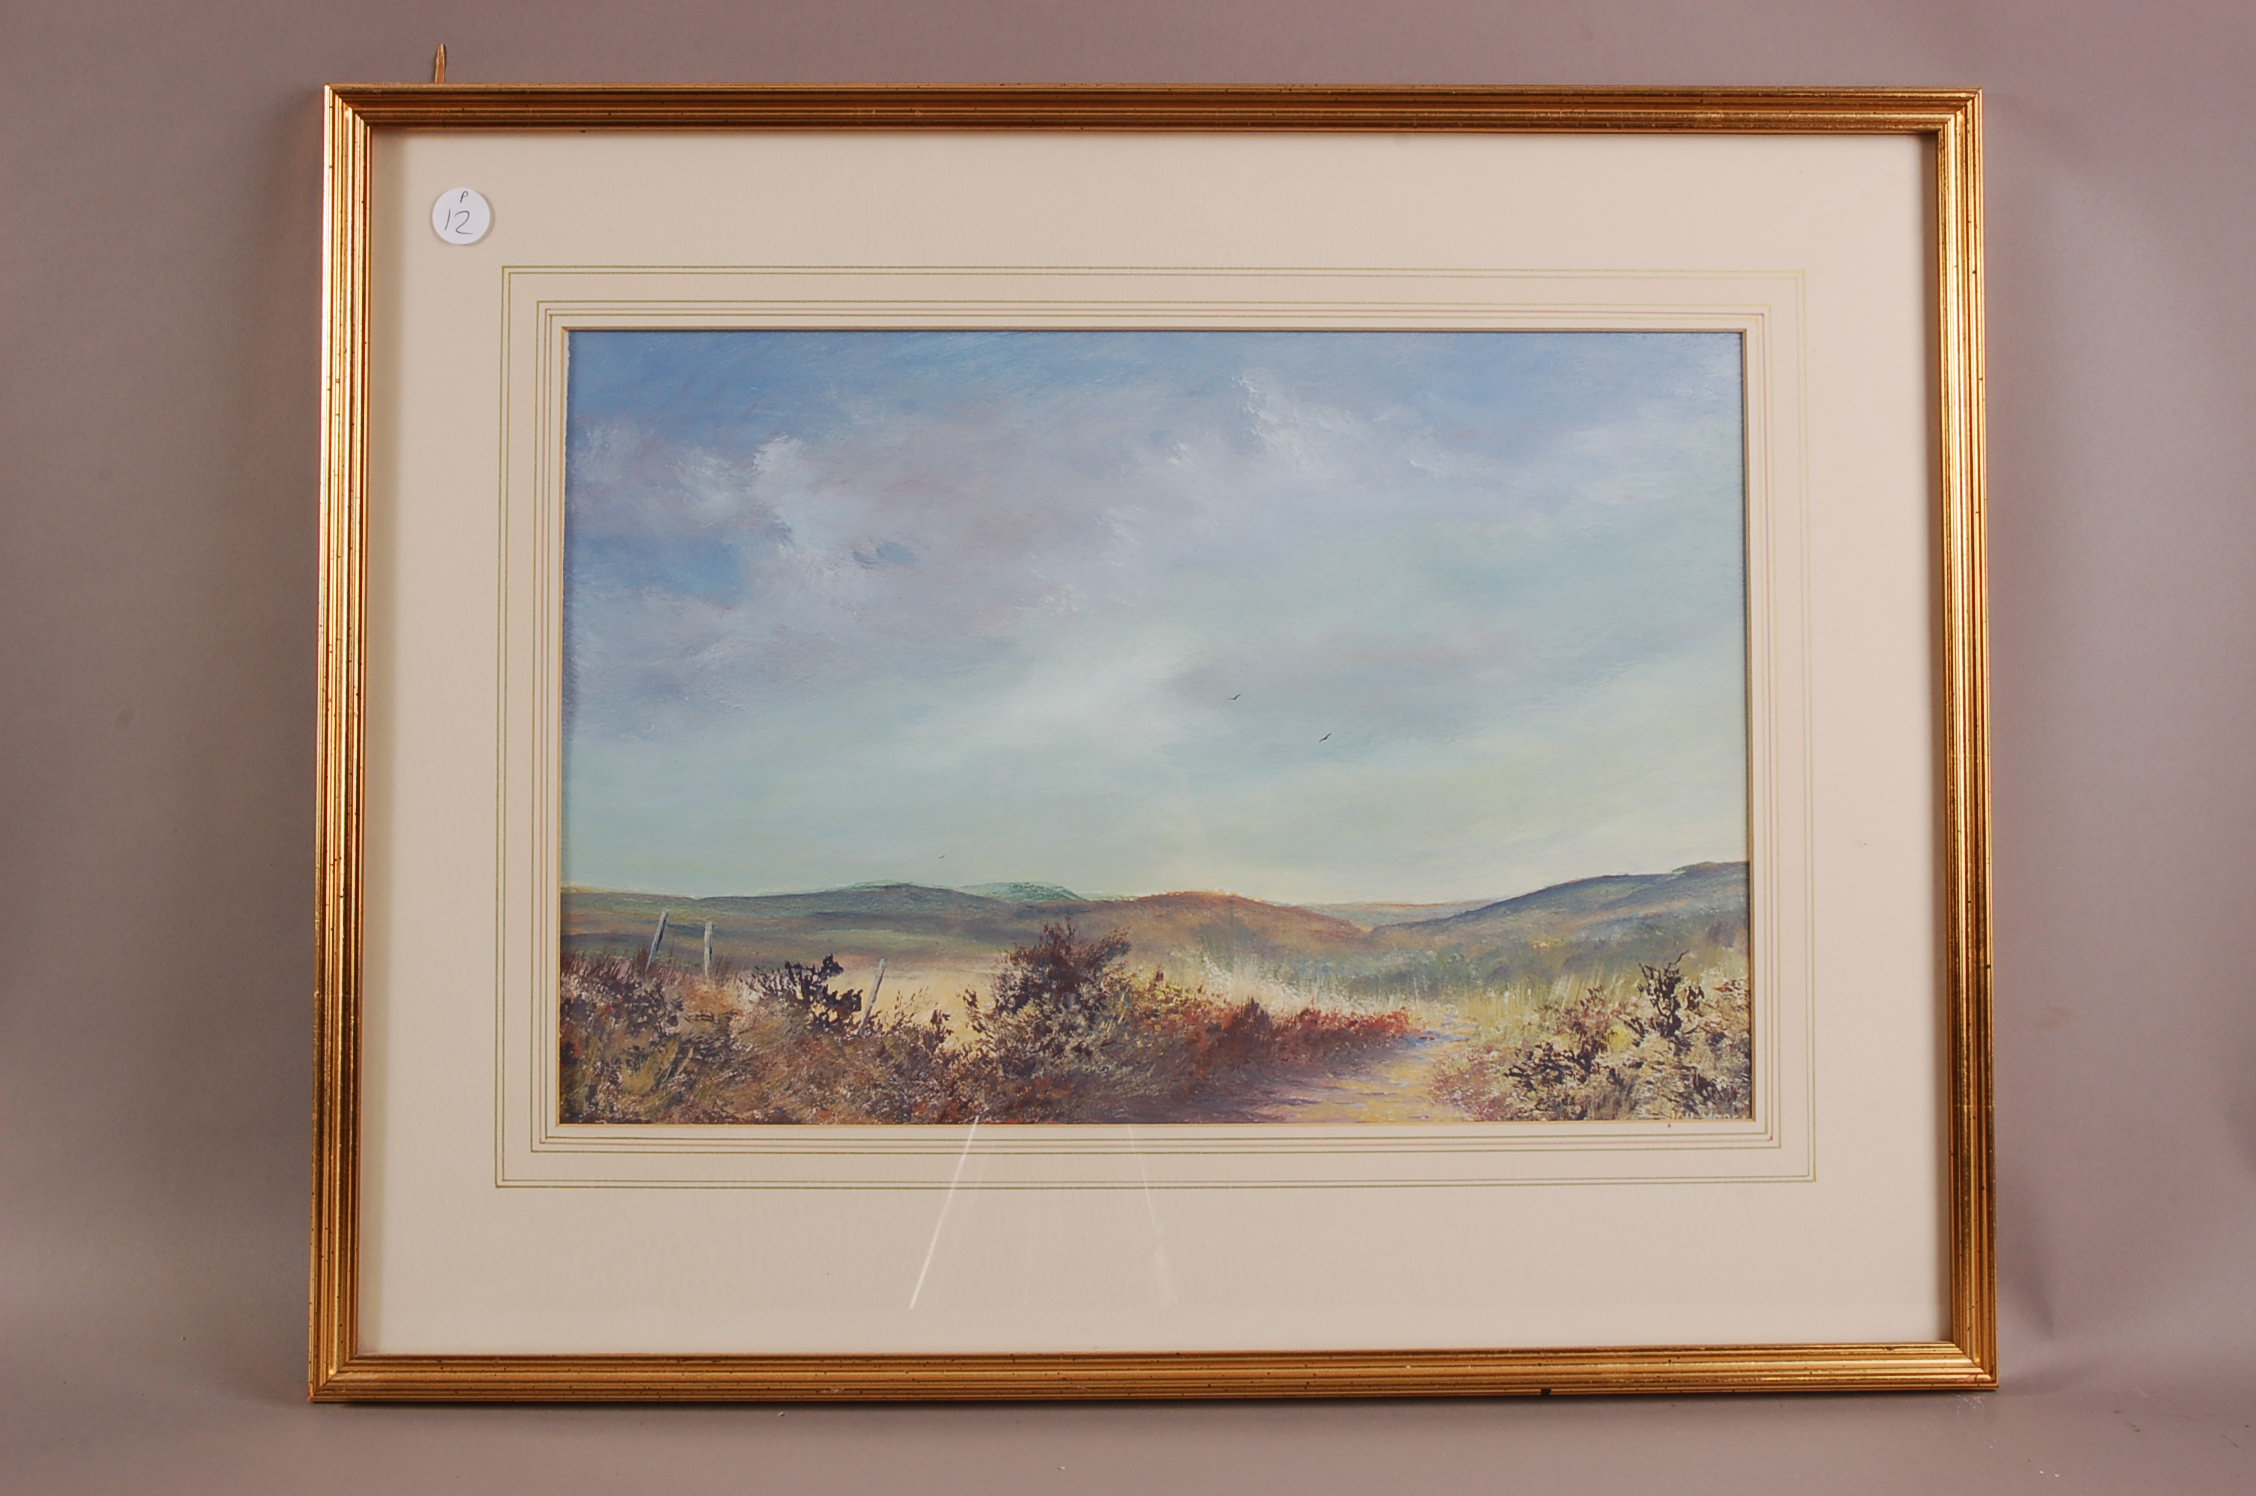 Jon Morgan (20th century), 35cm by 52cm, watercolour on paper, Moor Landscape, signed, framed